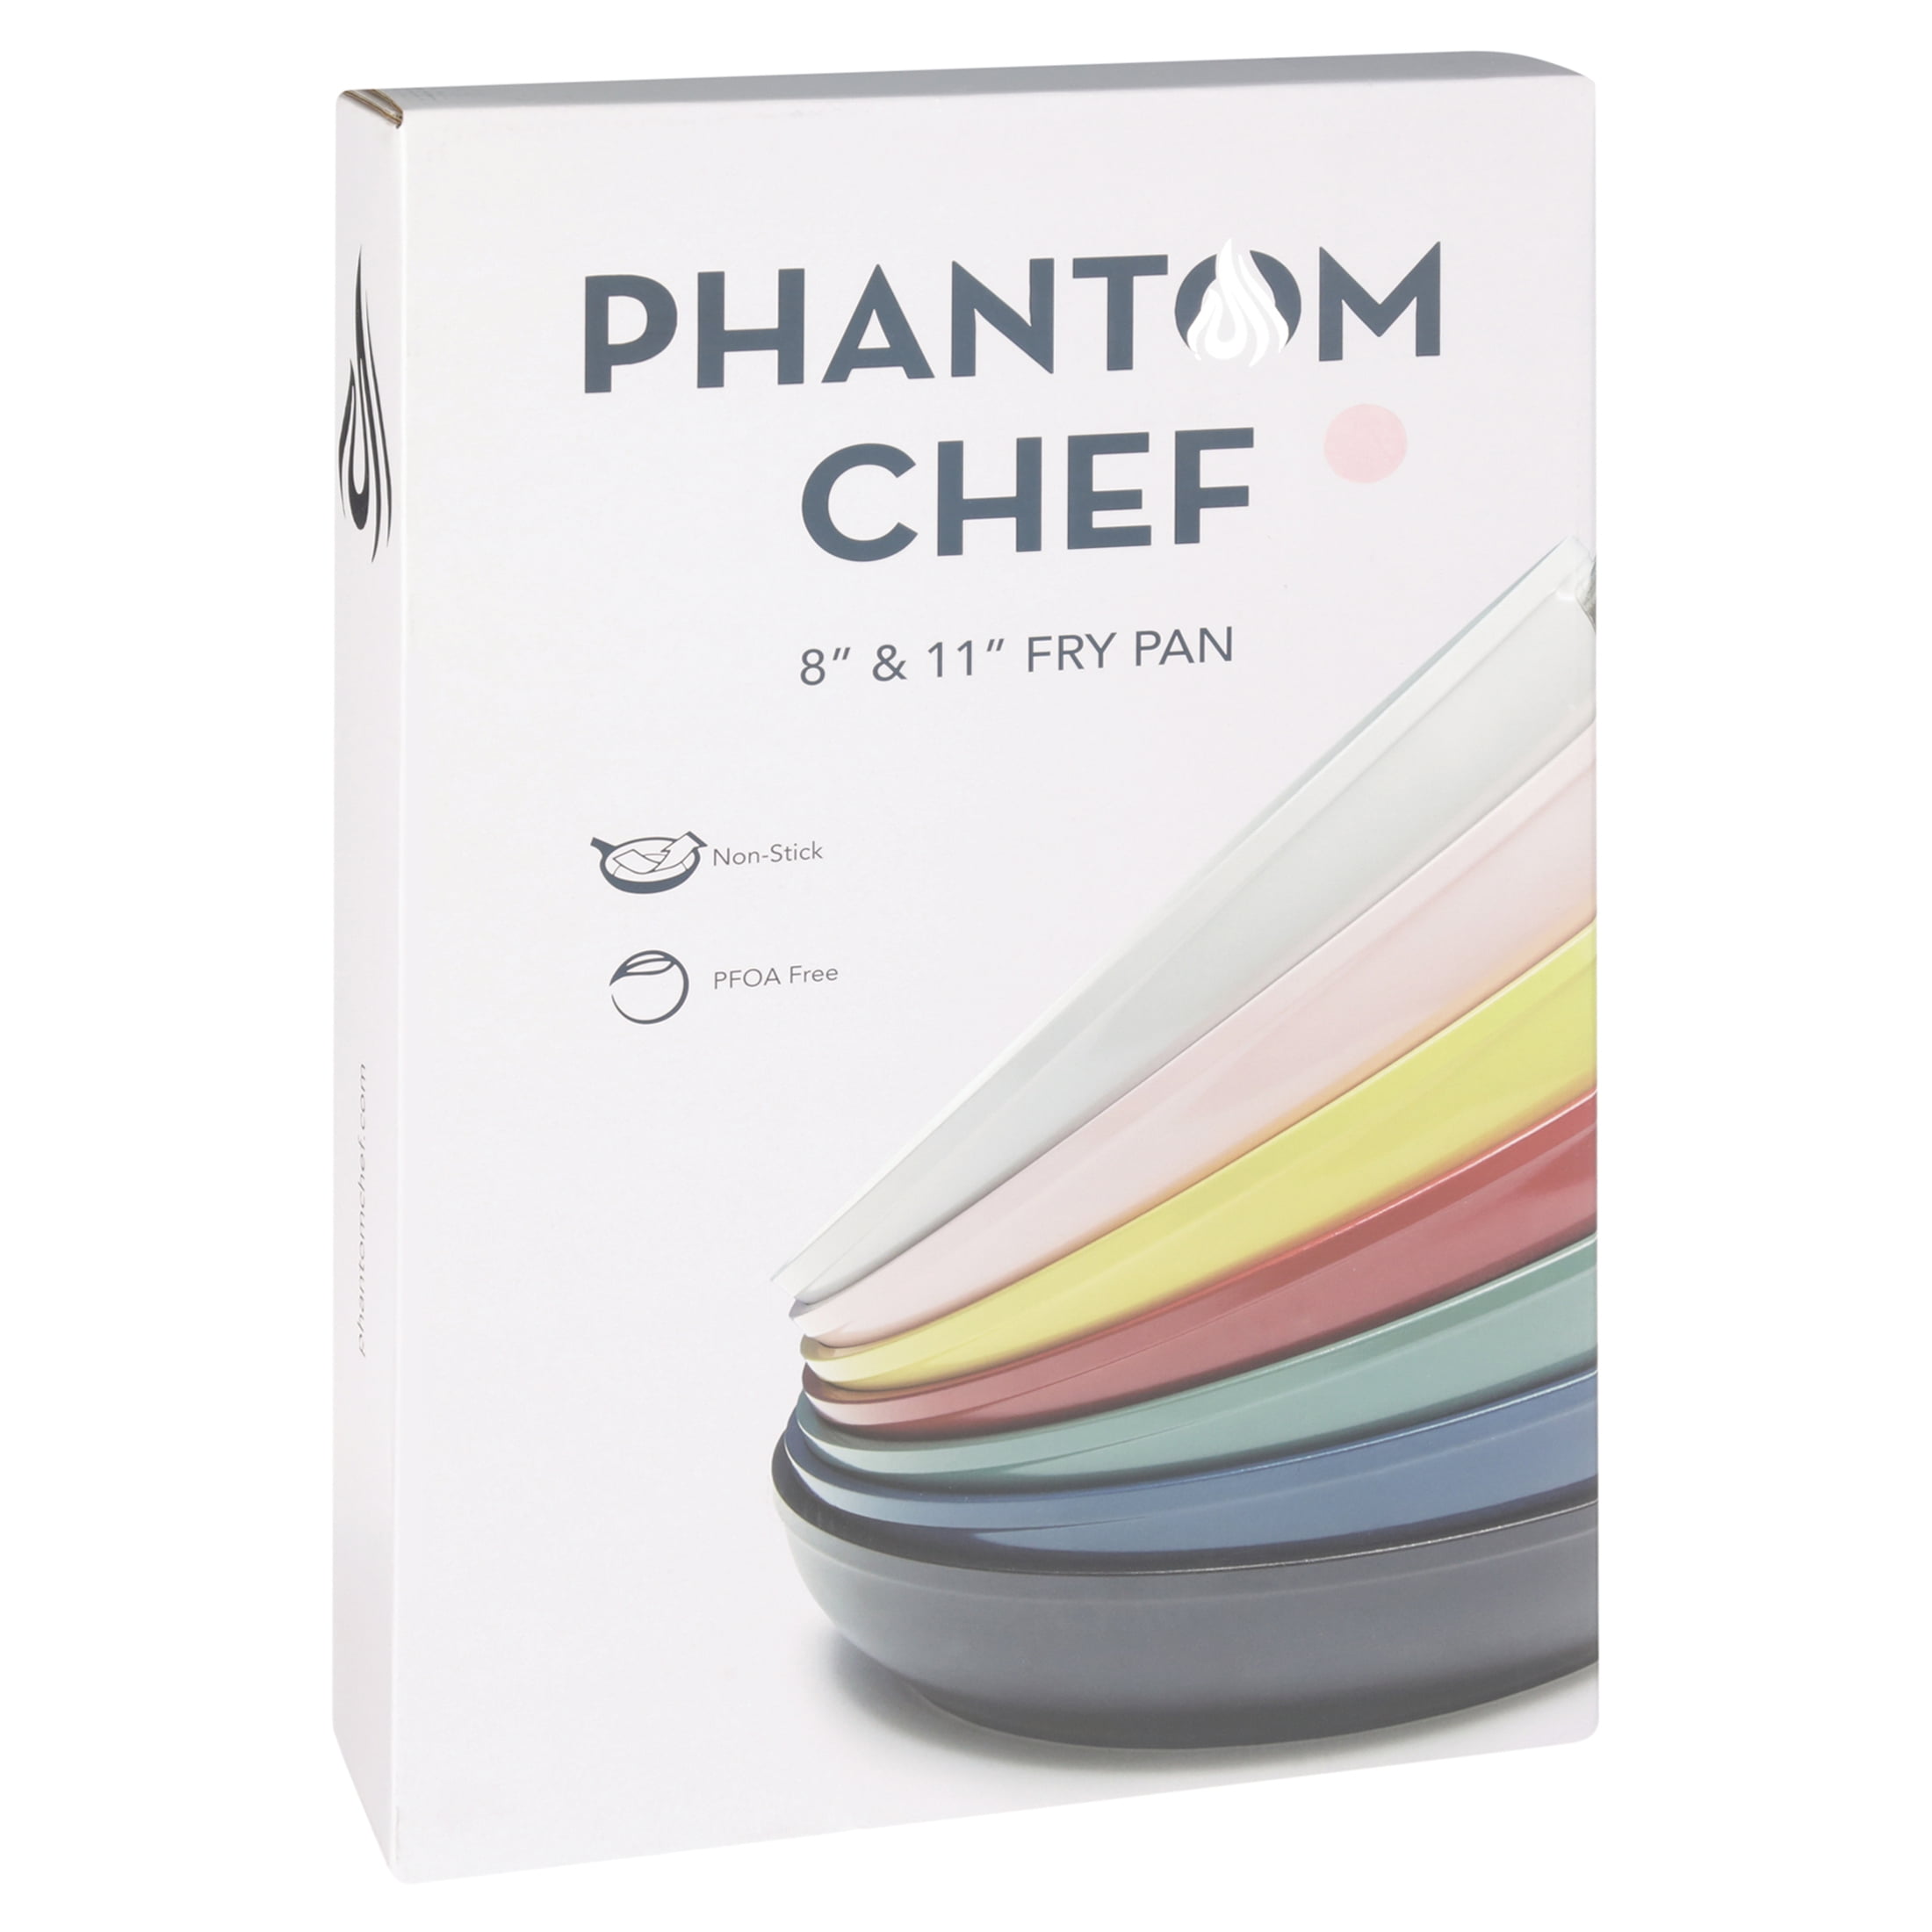 PHANTOM CHEF 8 Fry Pan in Navy Blue NEW in Box